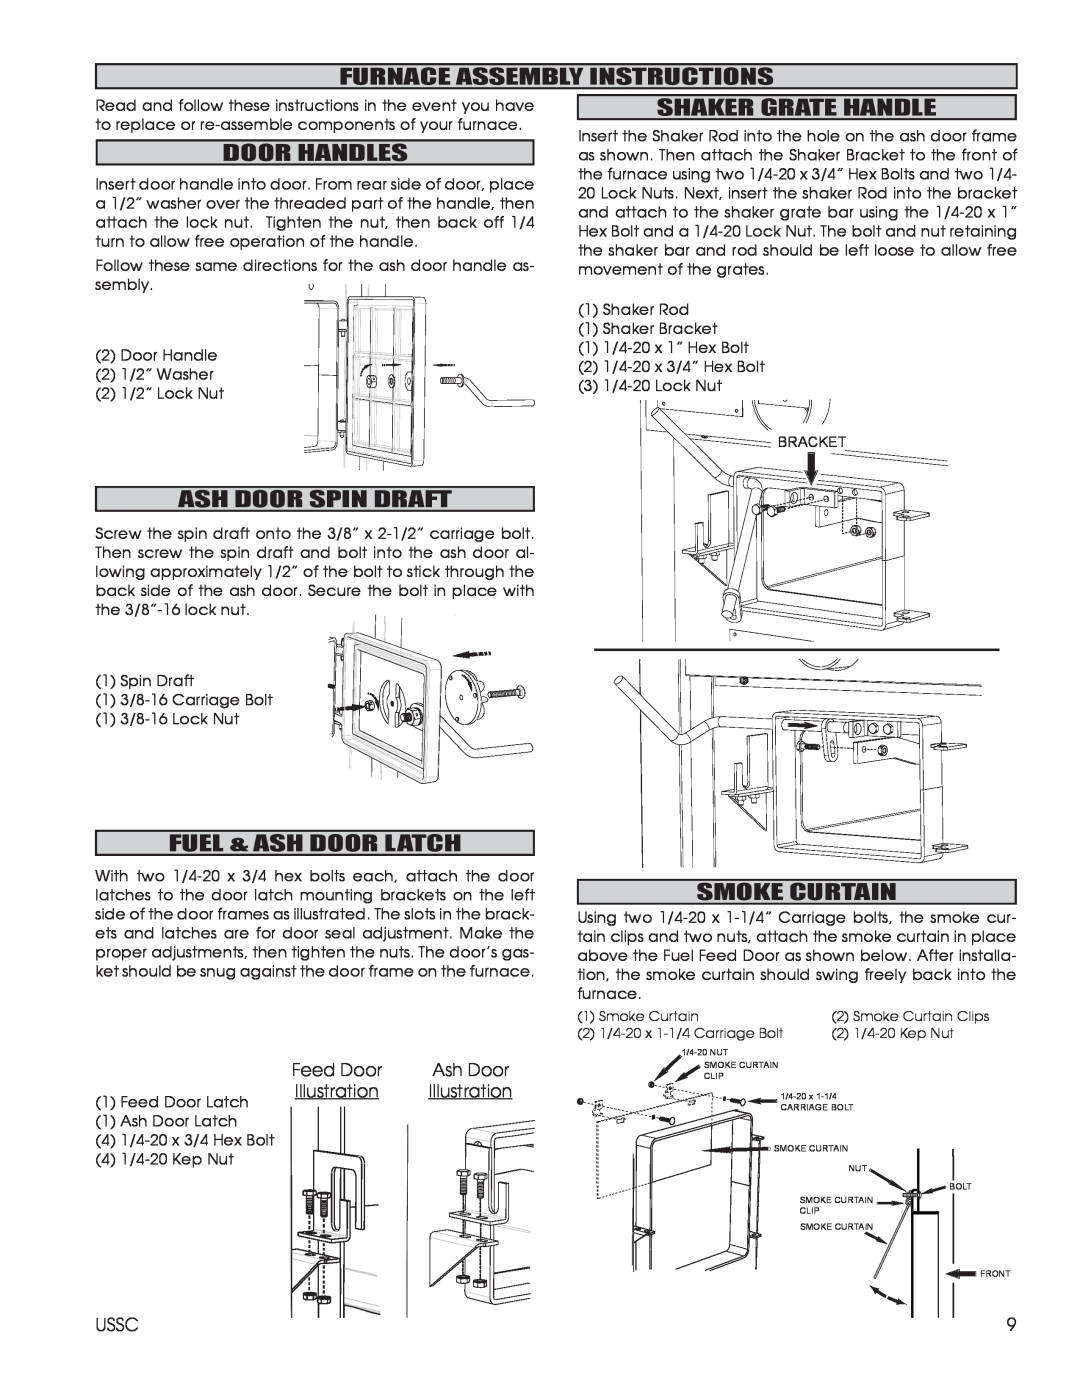 United States Stove 1600EF Furnace Assembly Instructions, Shaker Grate Handle, Door Handles, Ash Door Spin Draft 